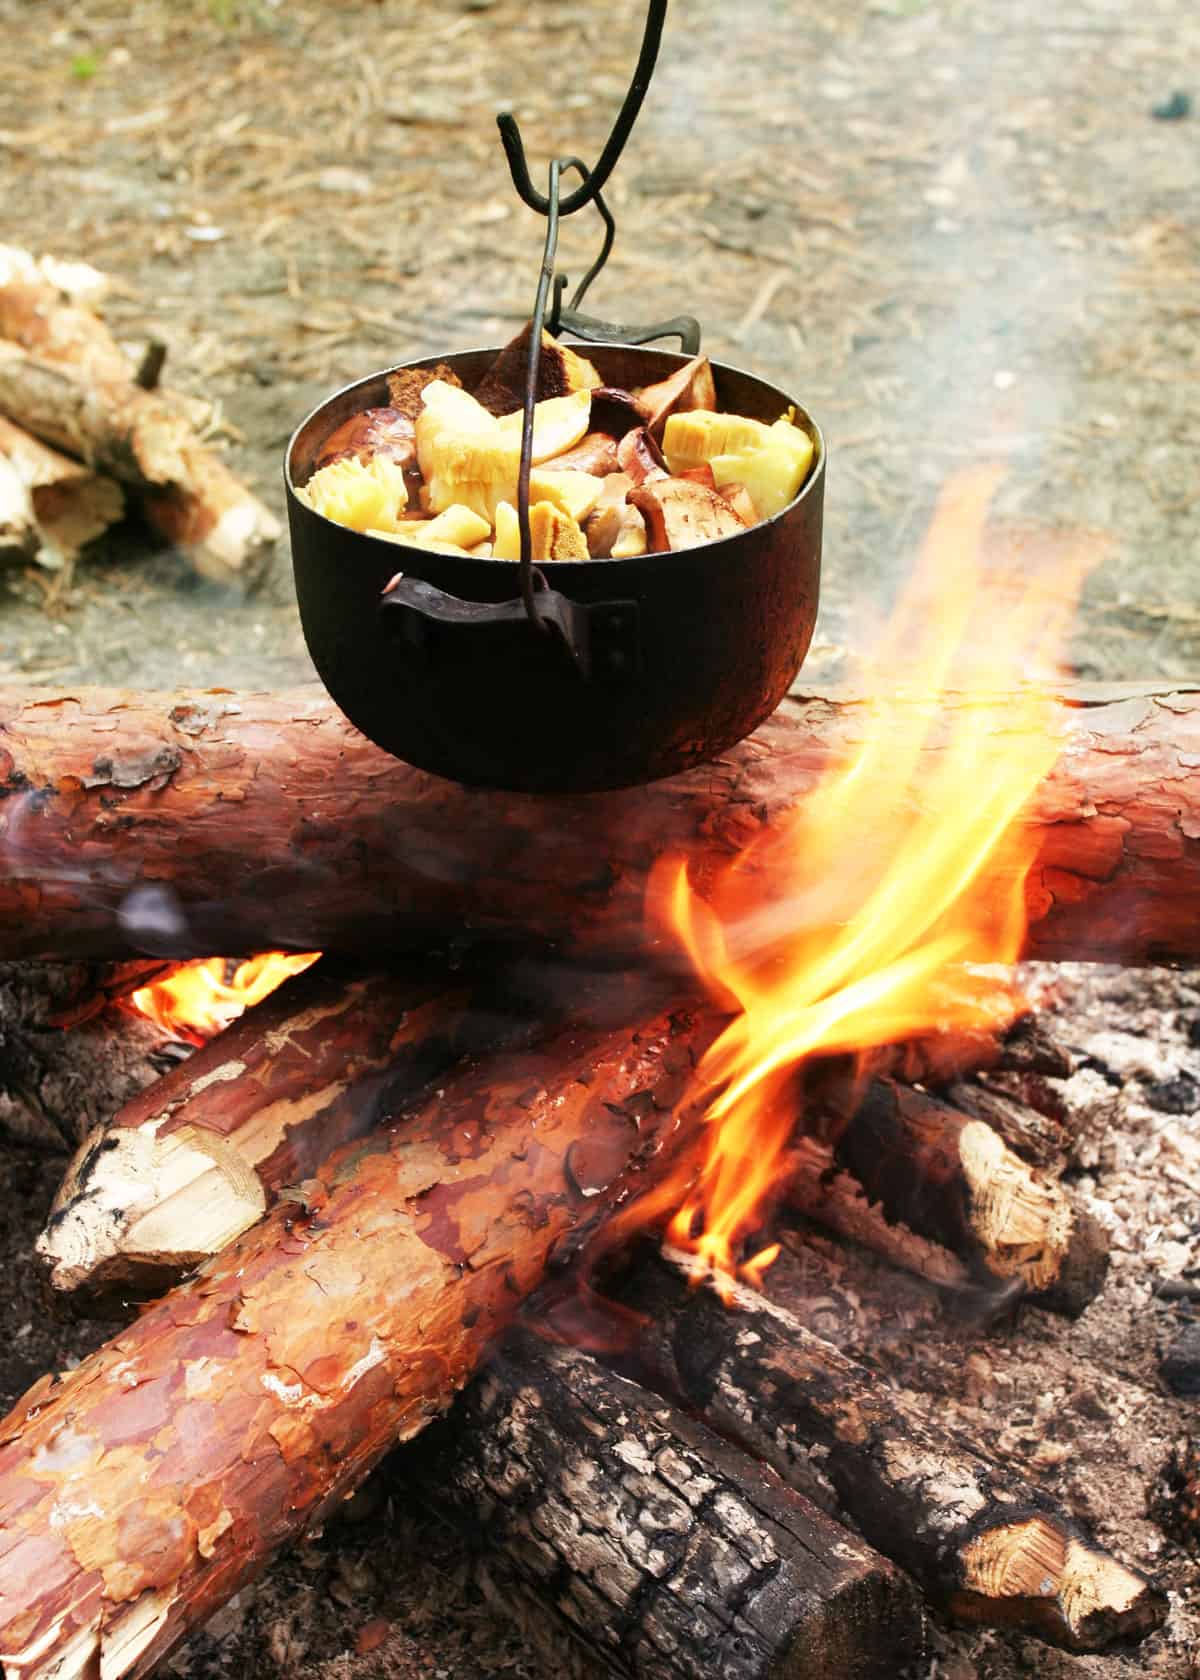 Campfire cooking methods